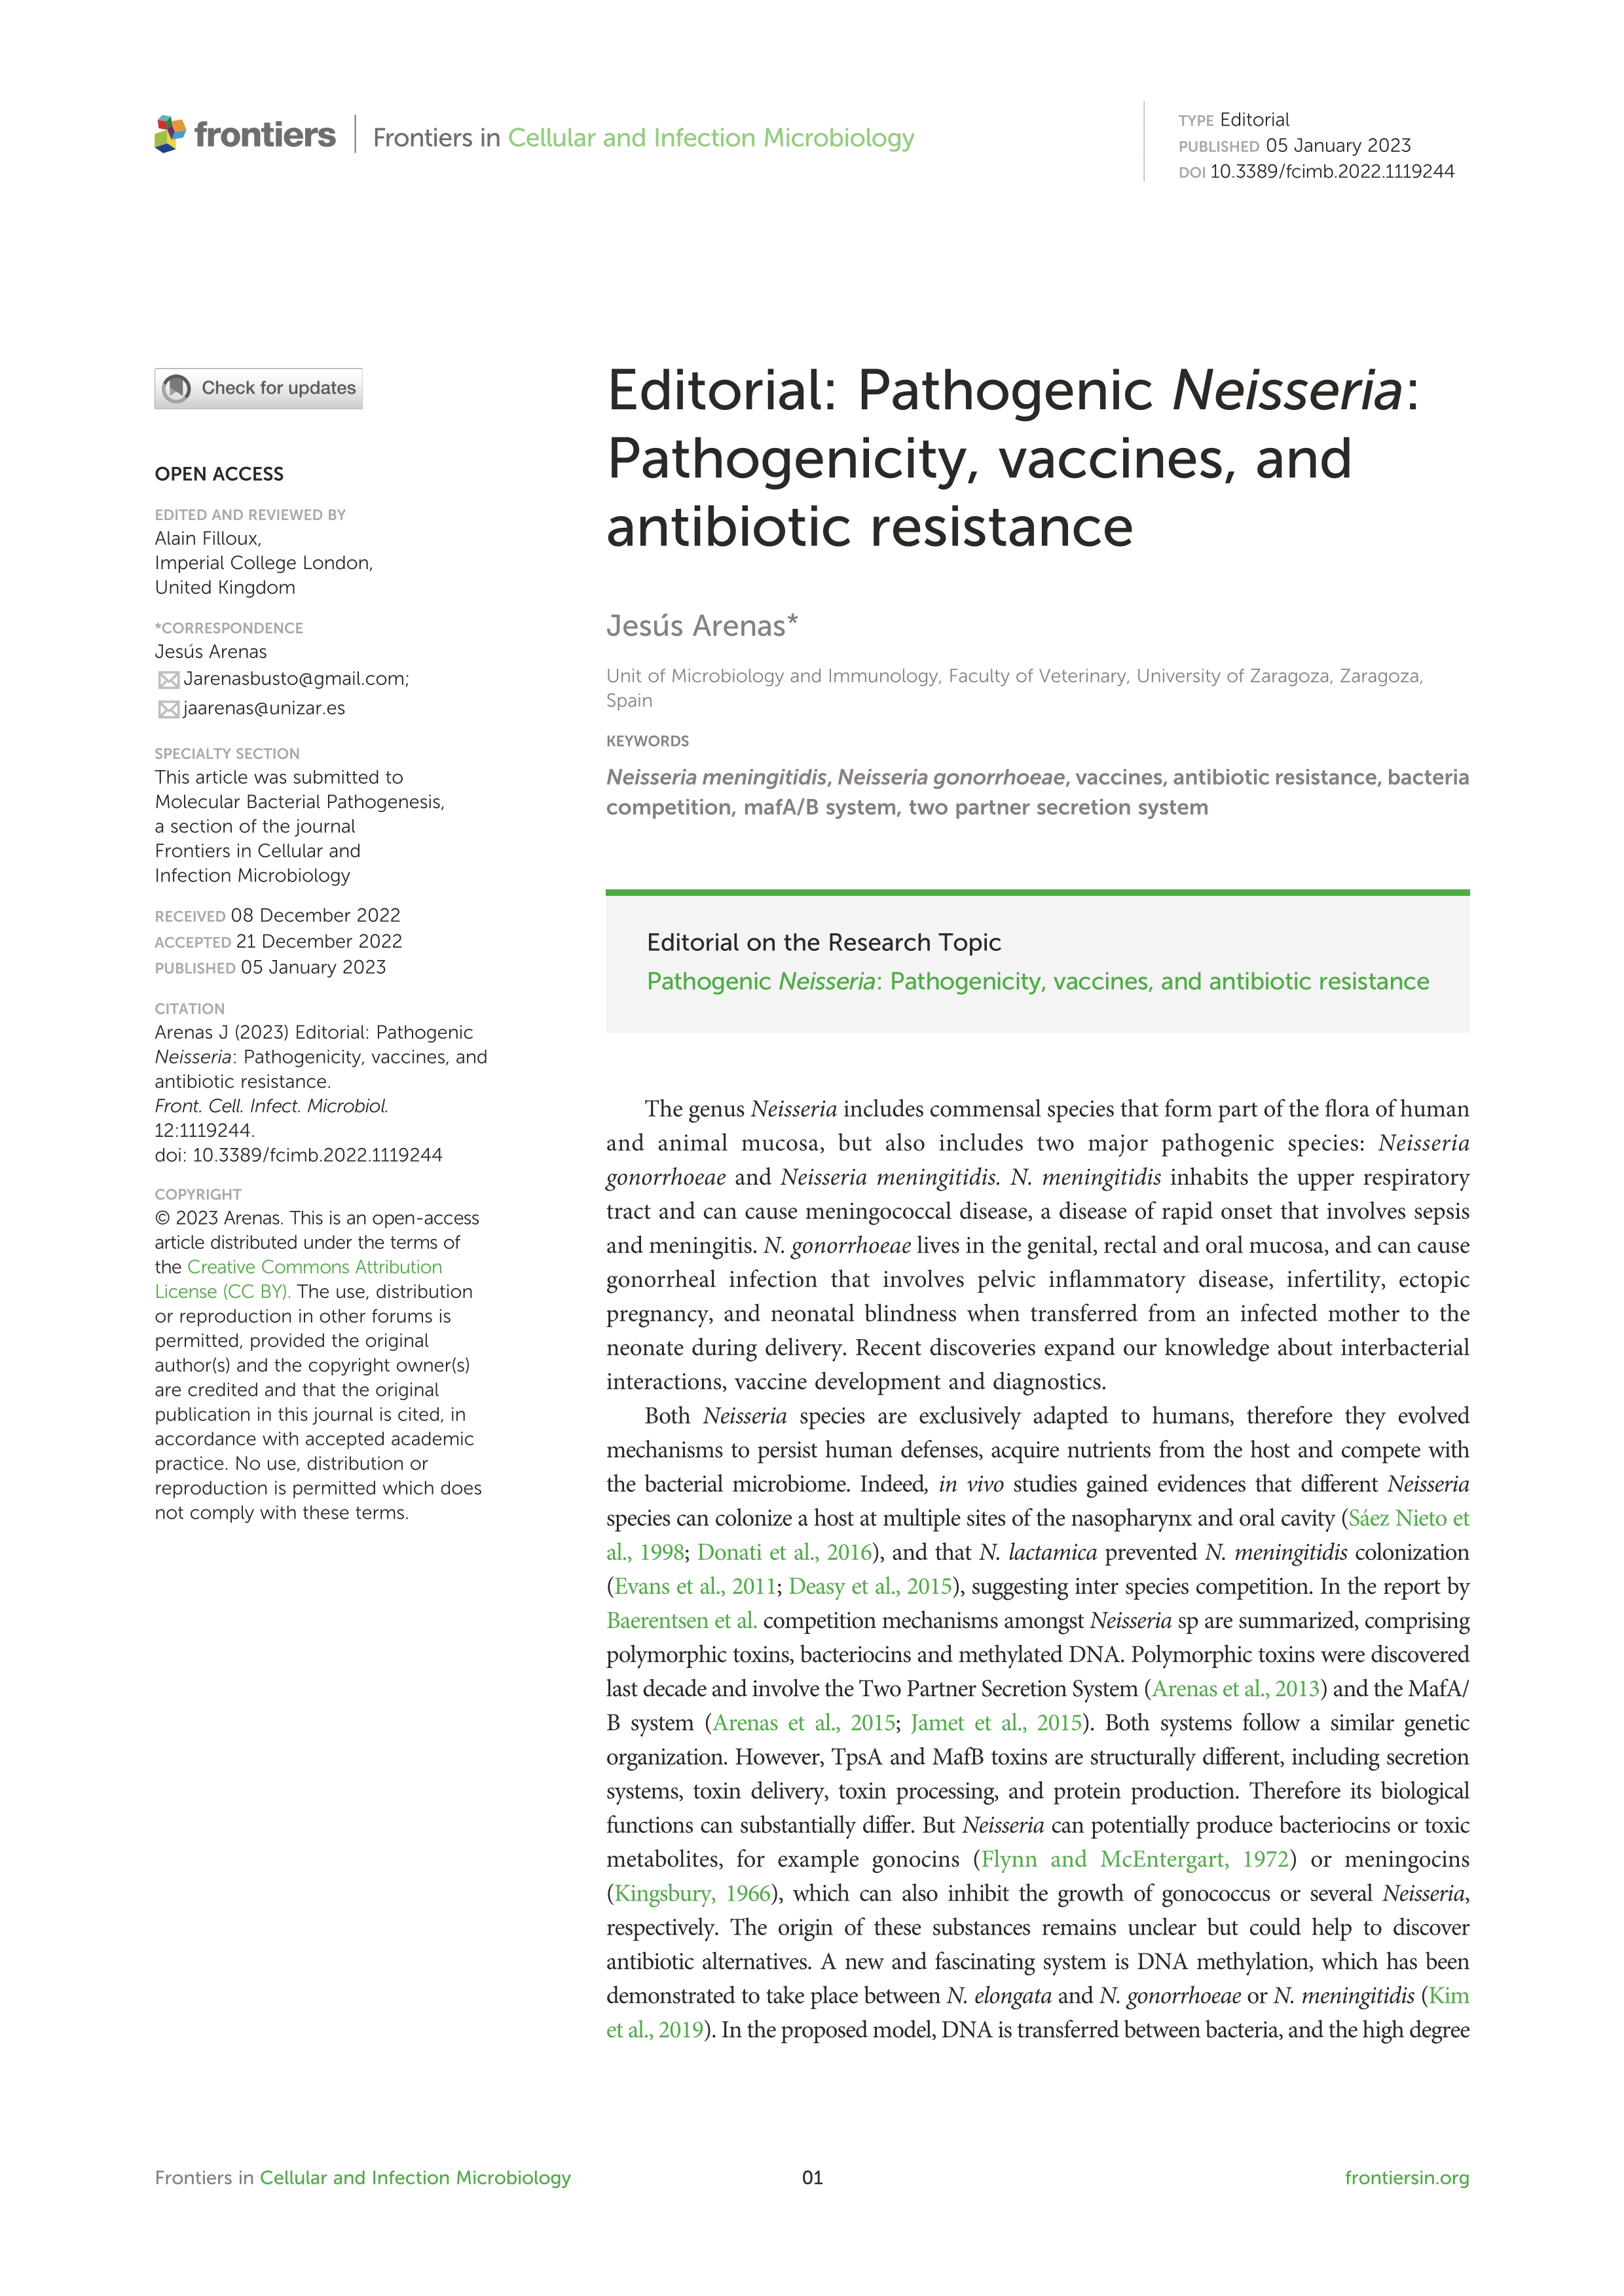 Editorial: Pathogenic Neisseria: Pathogenicity, vaccines, and antibiotic resistance